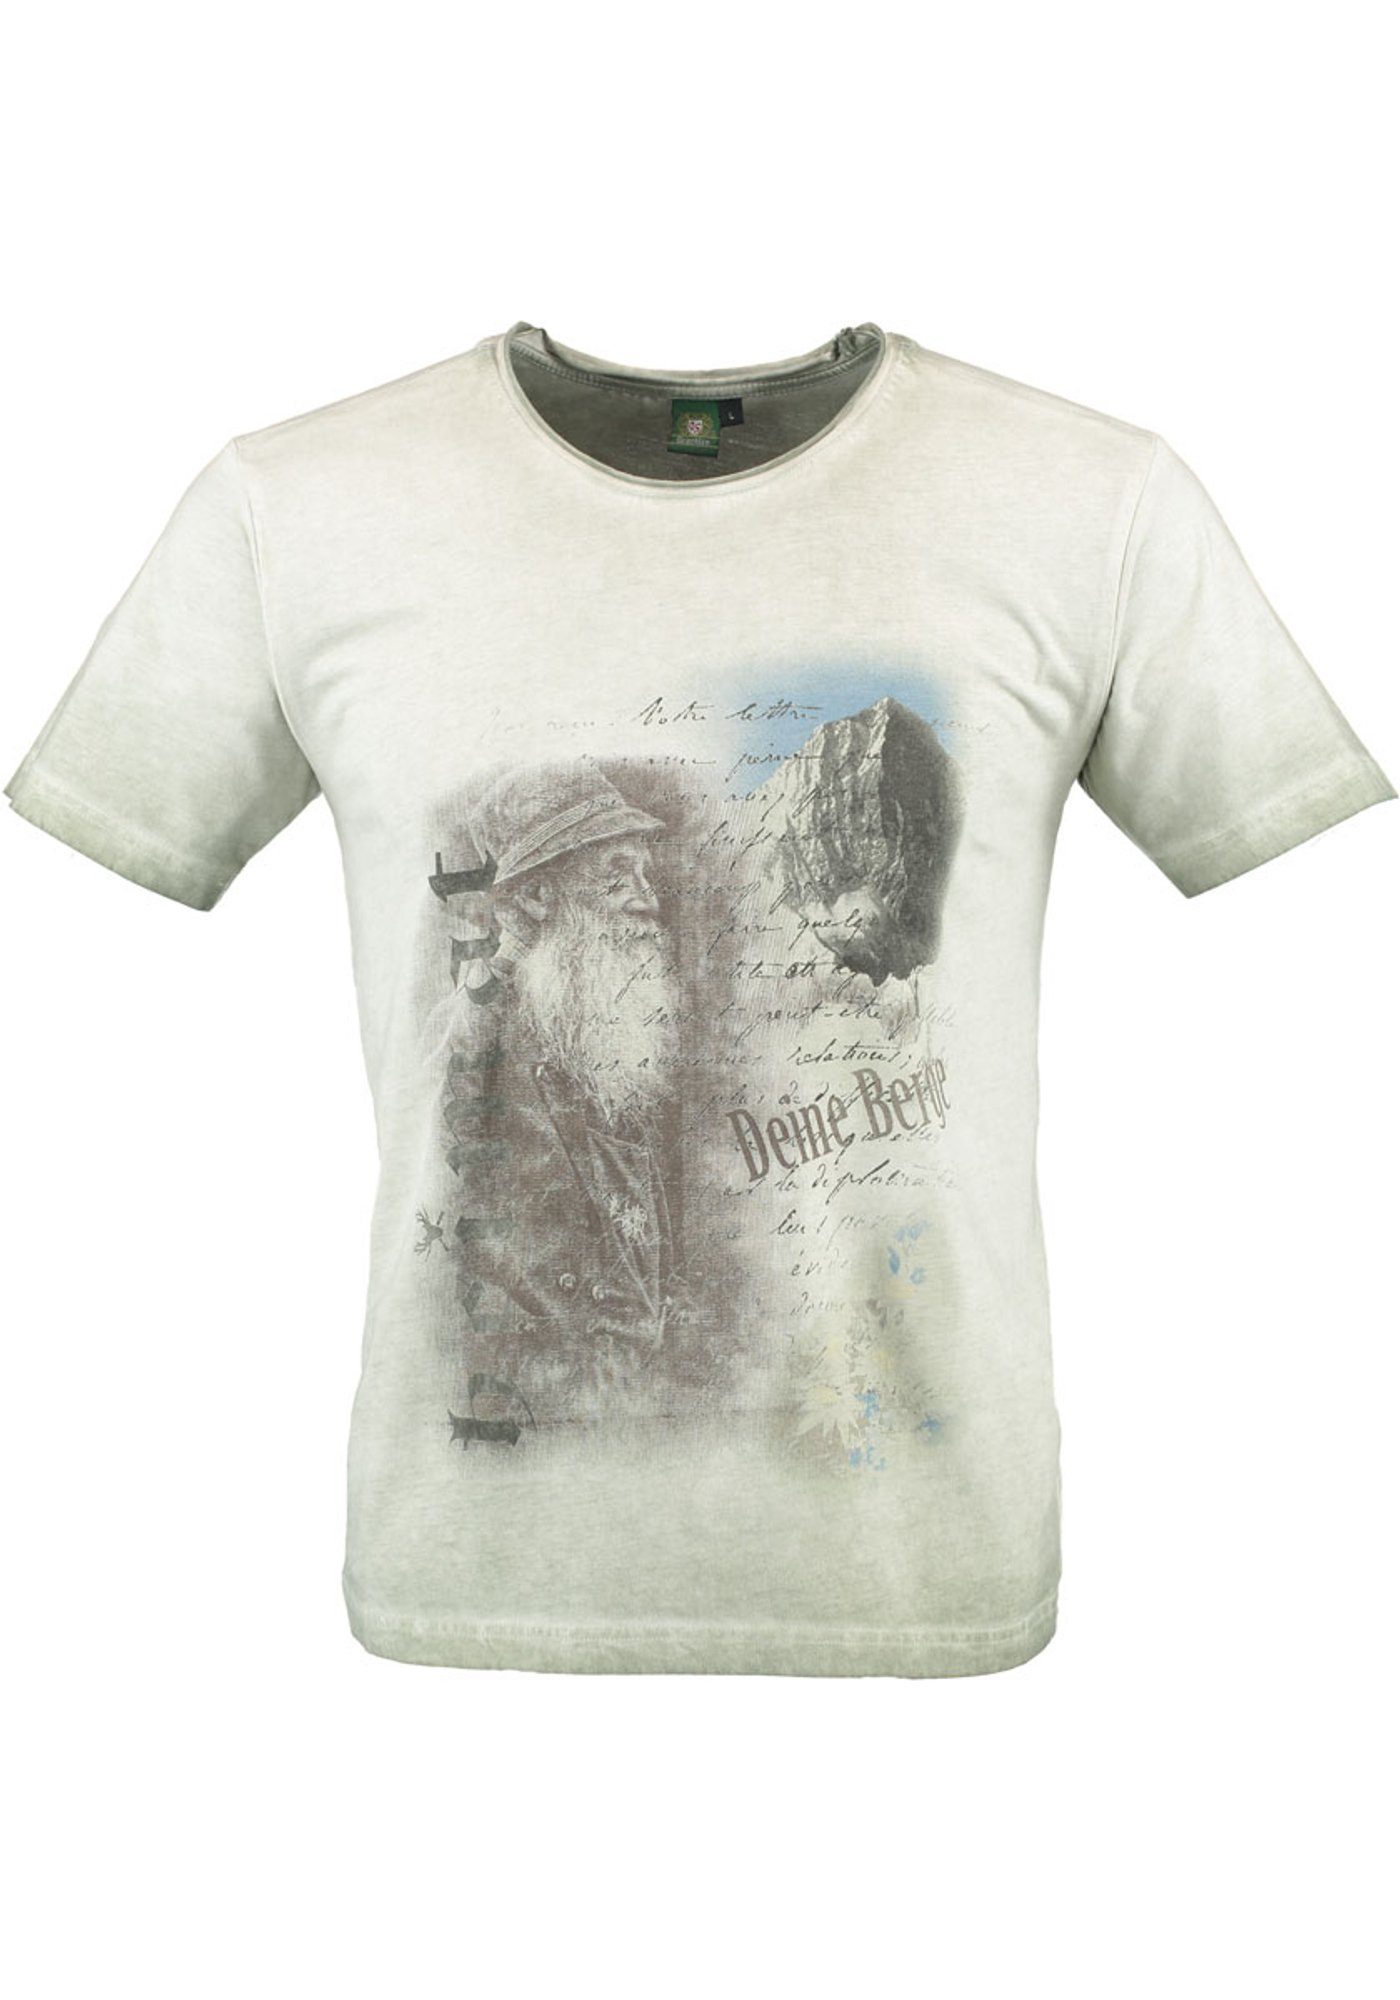 Kurzarm khaki/schlamm OS-Trachten Trachtenshirt mit Praiol T-Shirt Motivdruck